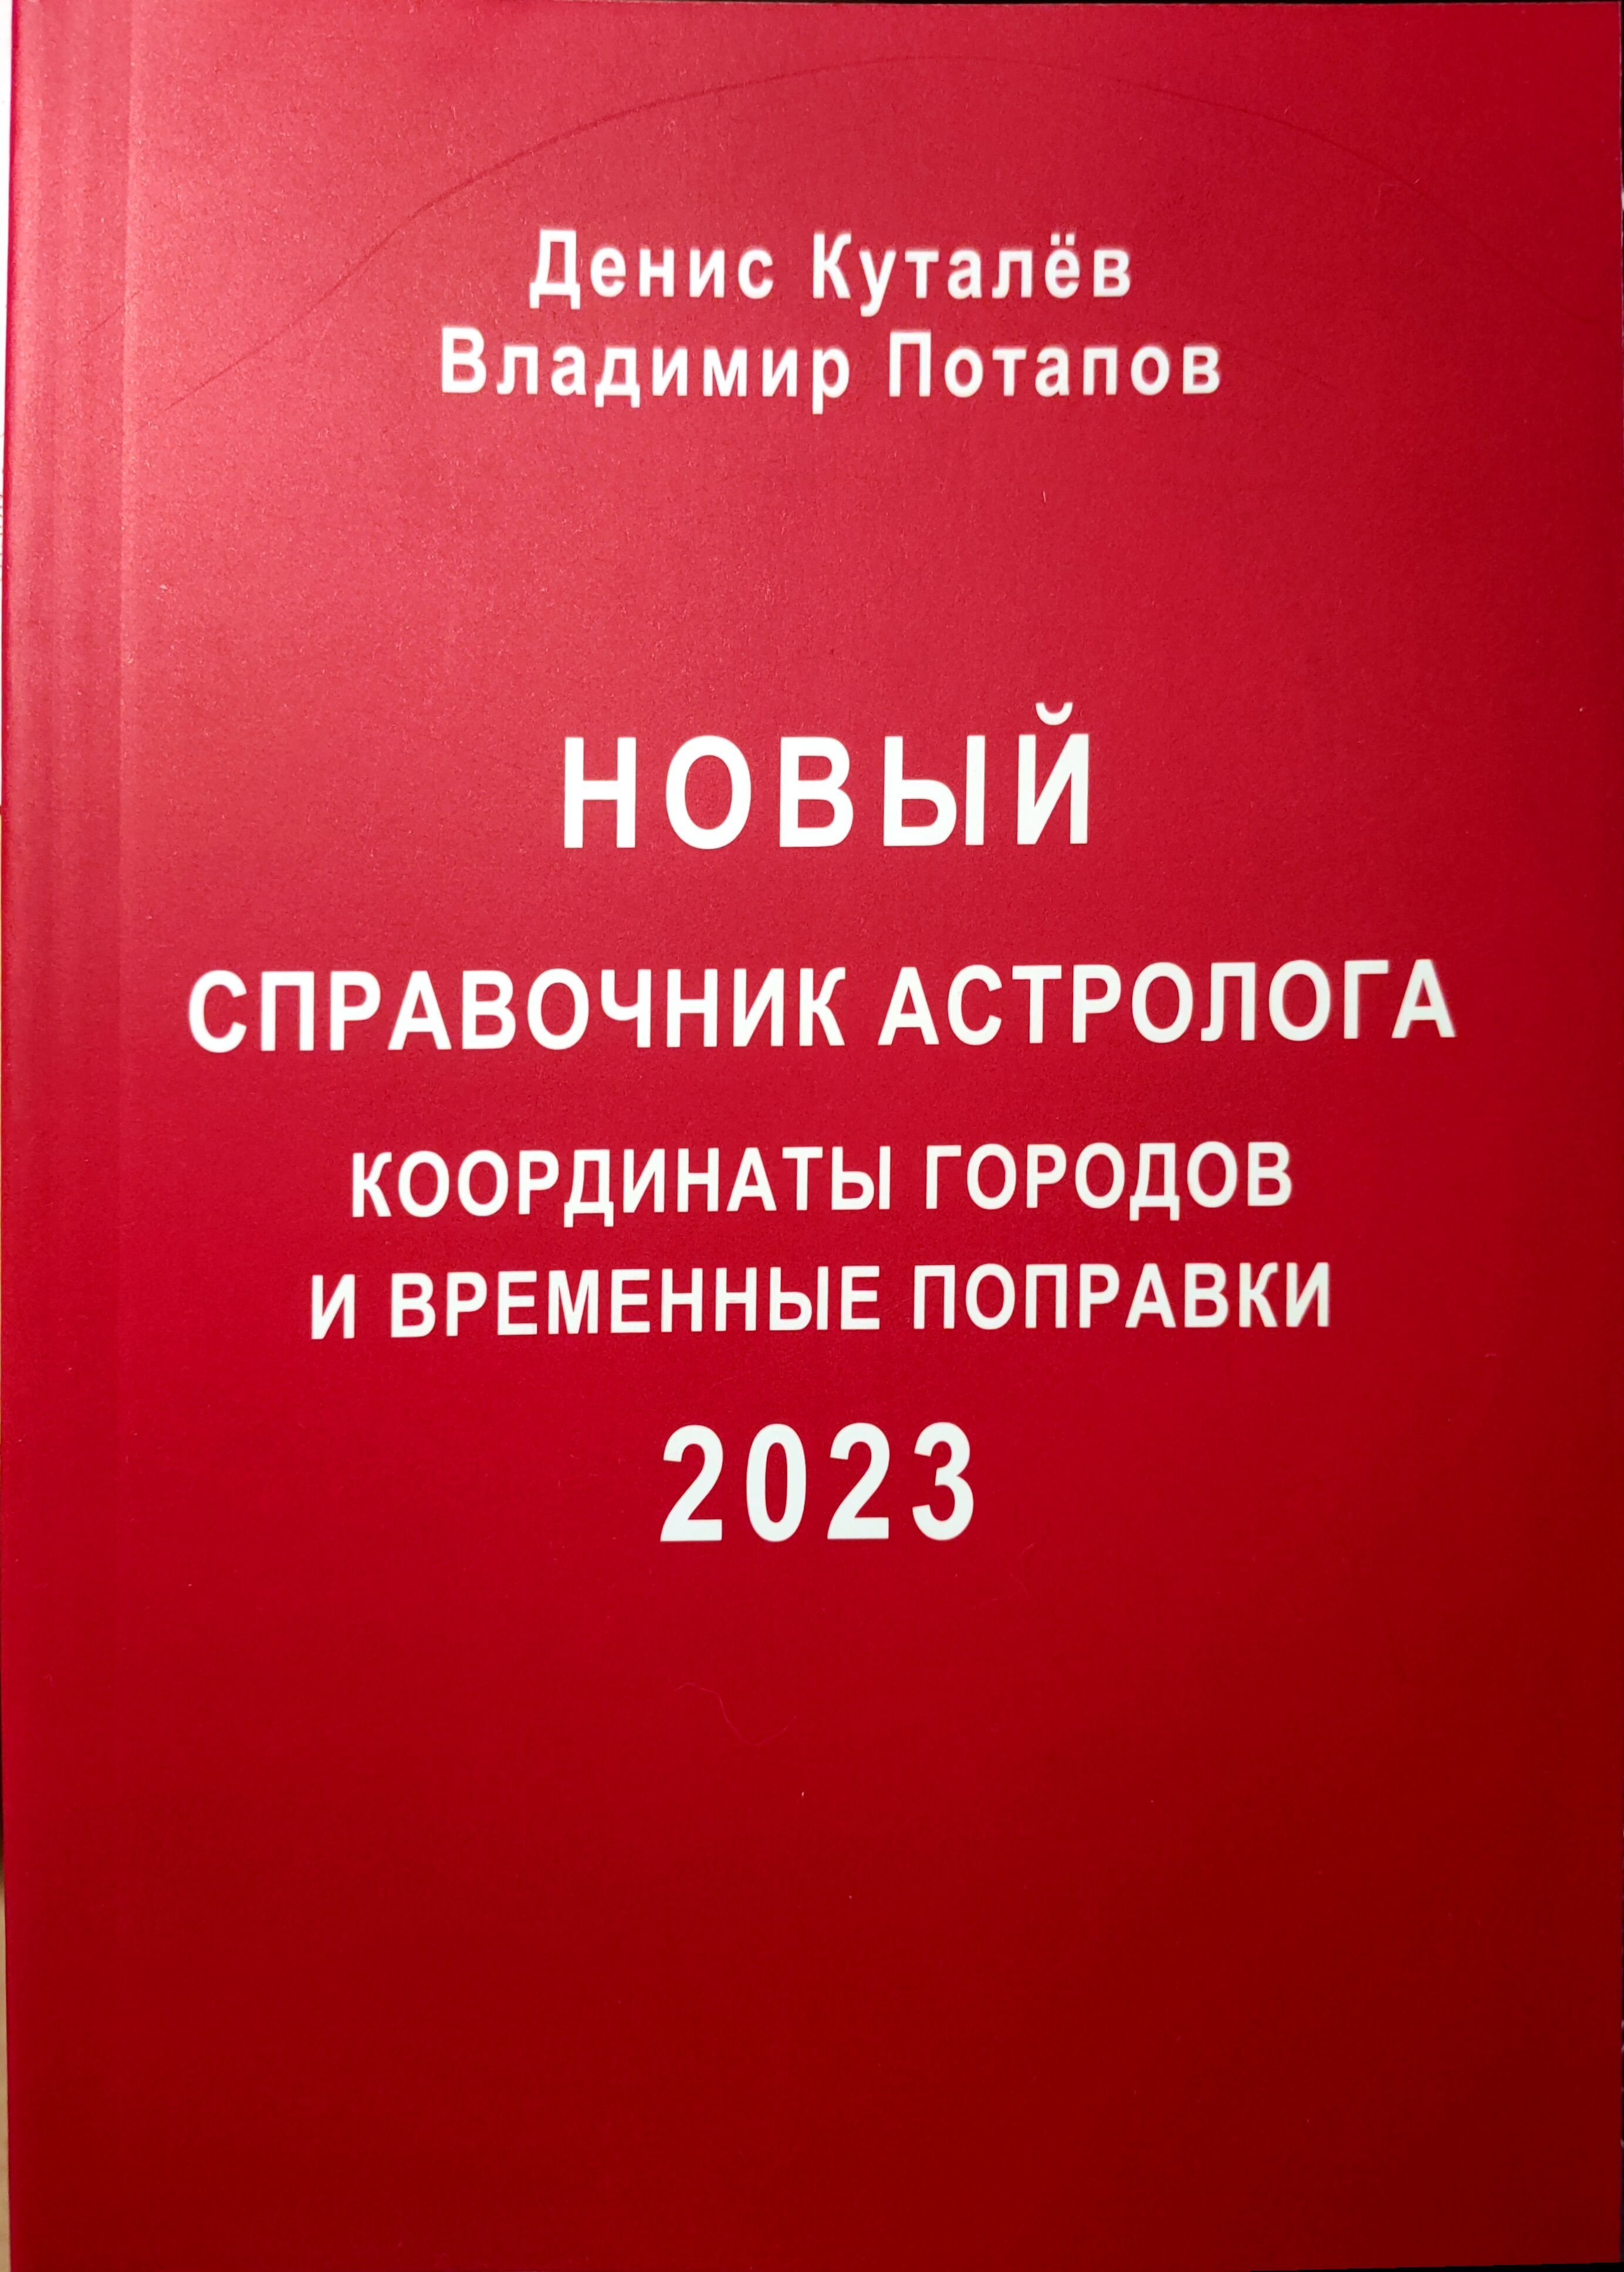 336 с изменениями на 2023